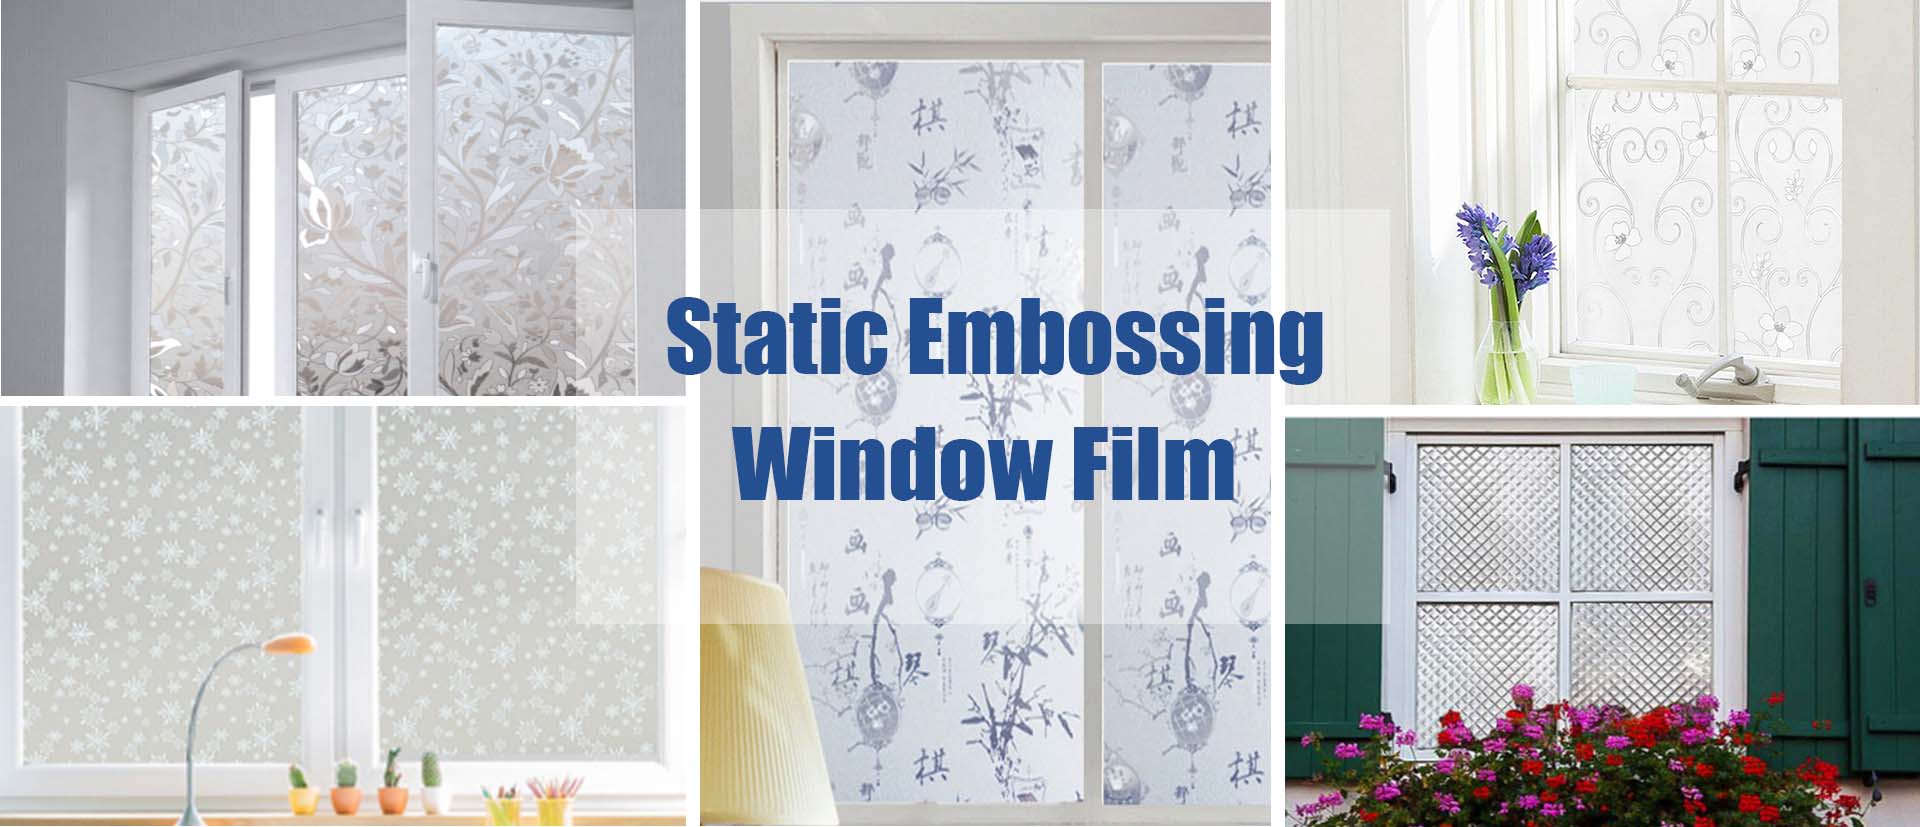 Static Embossing Window Film